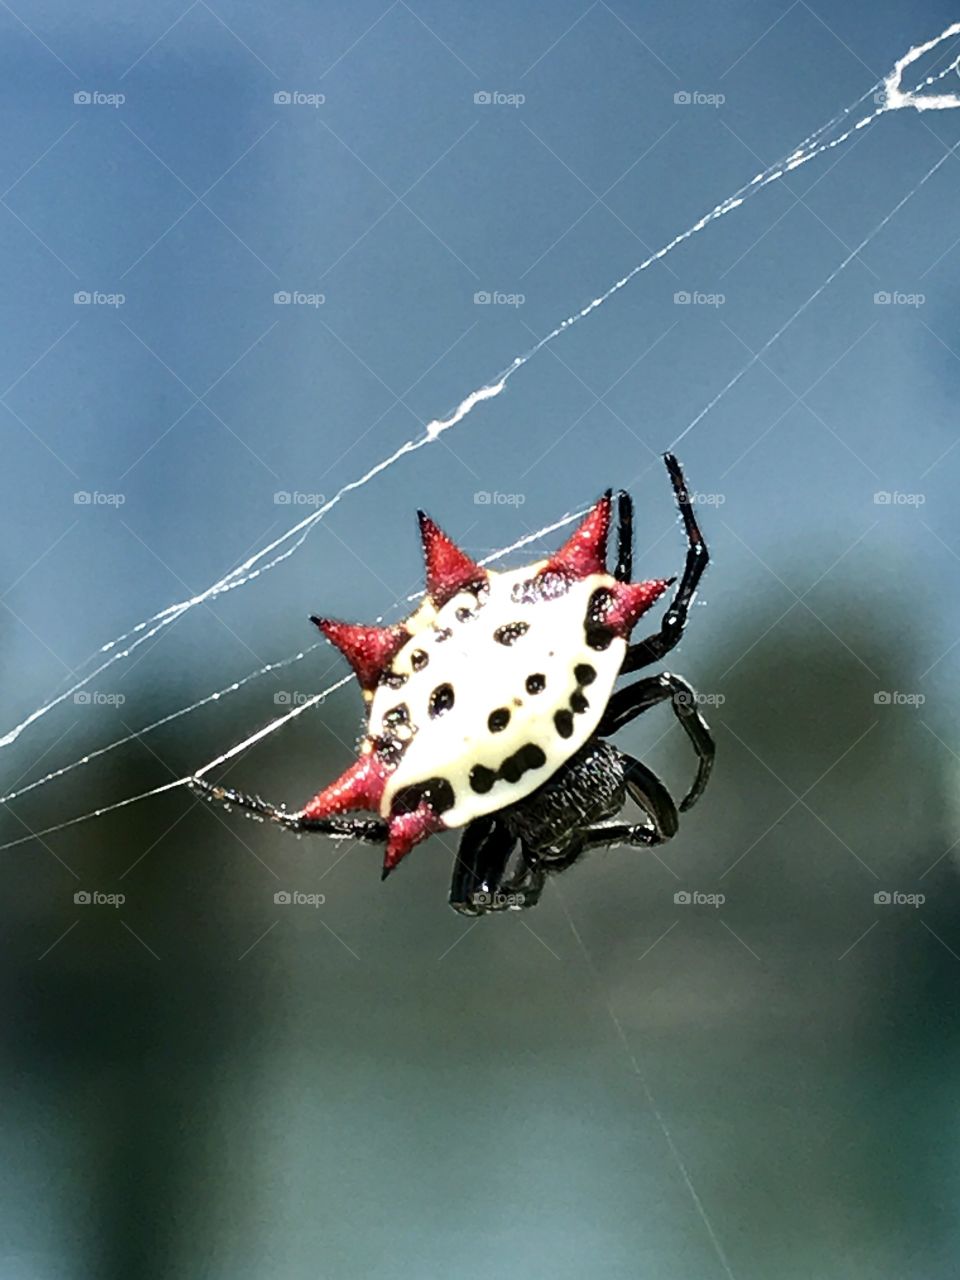 Crab Spider spinning web